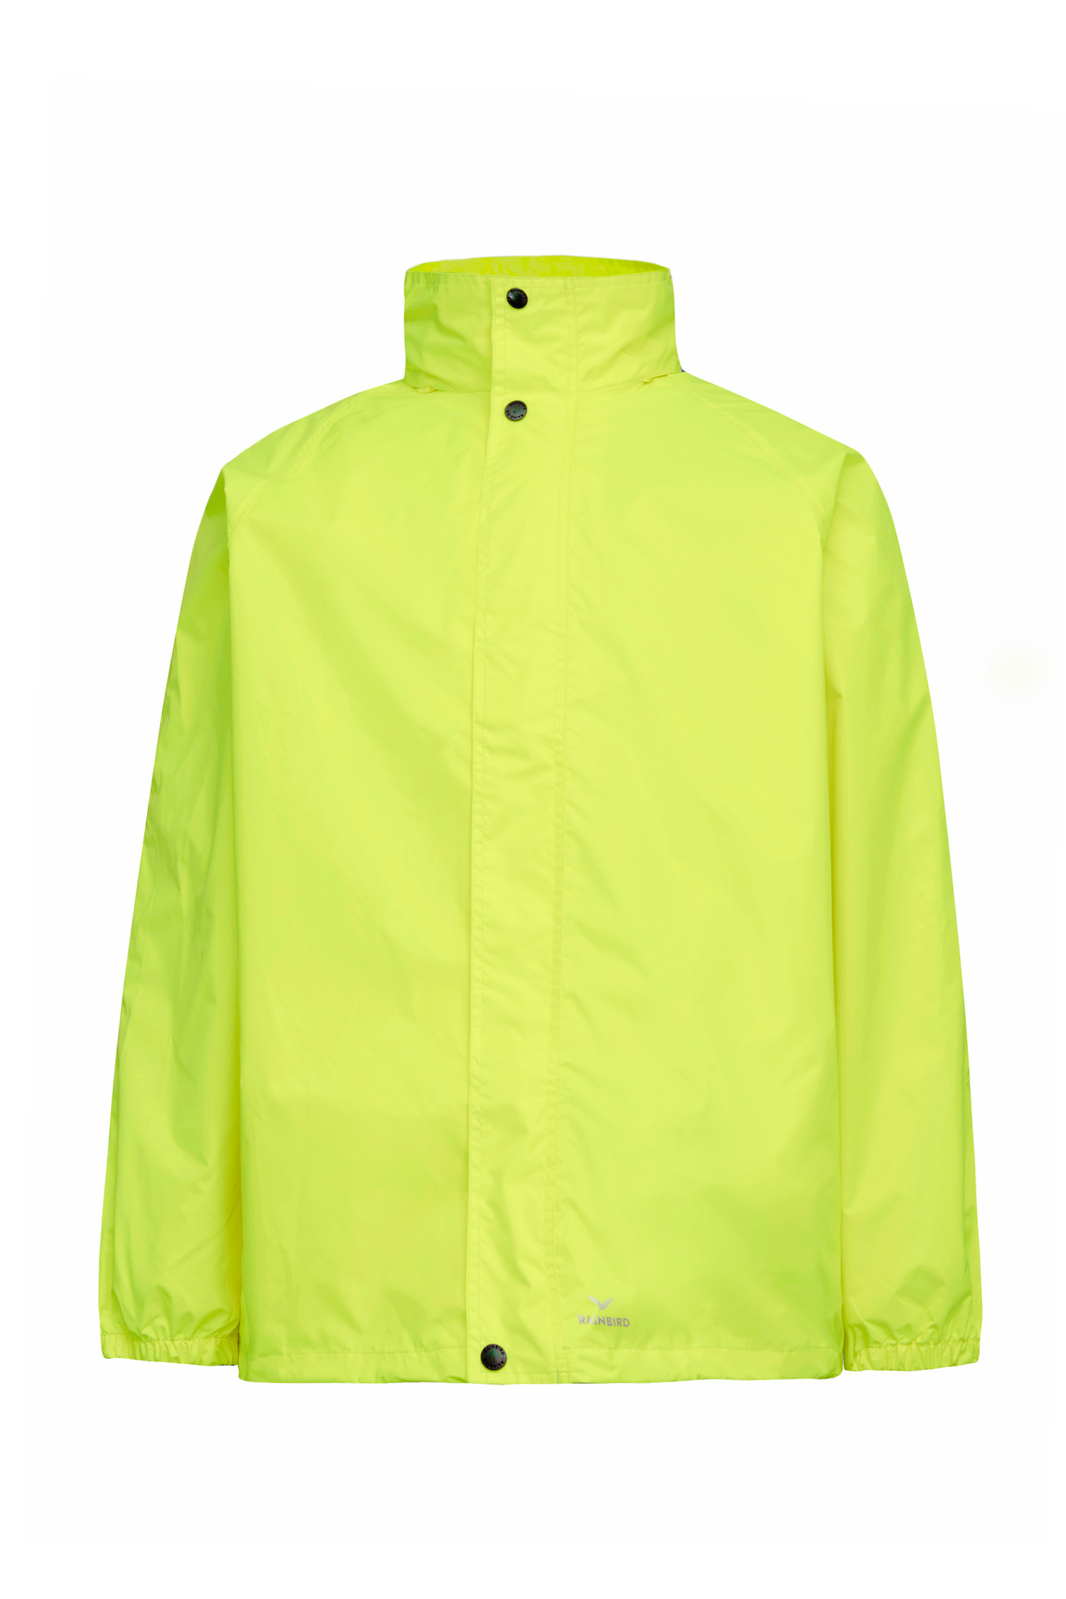 RAINBIRD™ Adults STOWaway Premium Rain Wet Weather Jacket